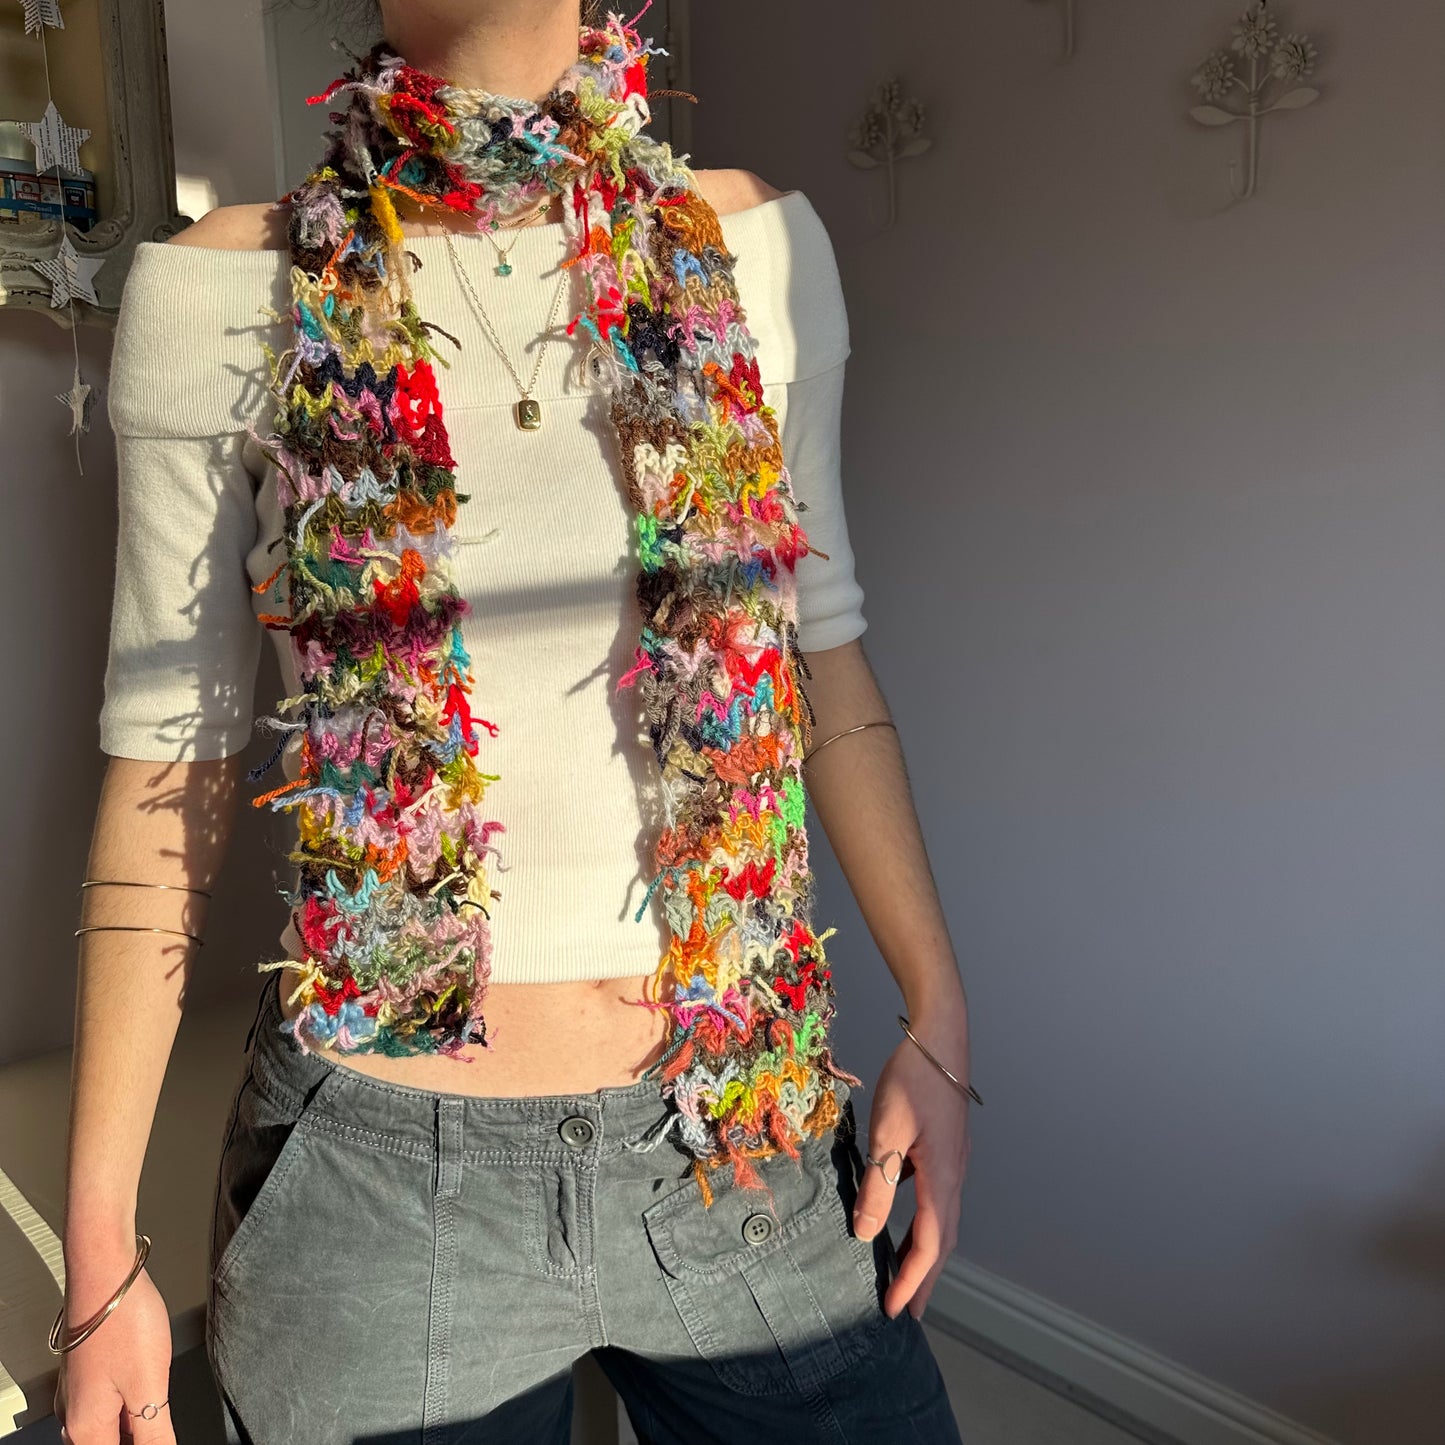 Scrappy skinny scarf #2 - handmade from leftover yarn scraps